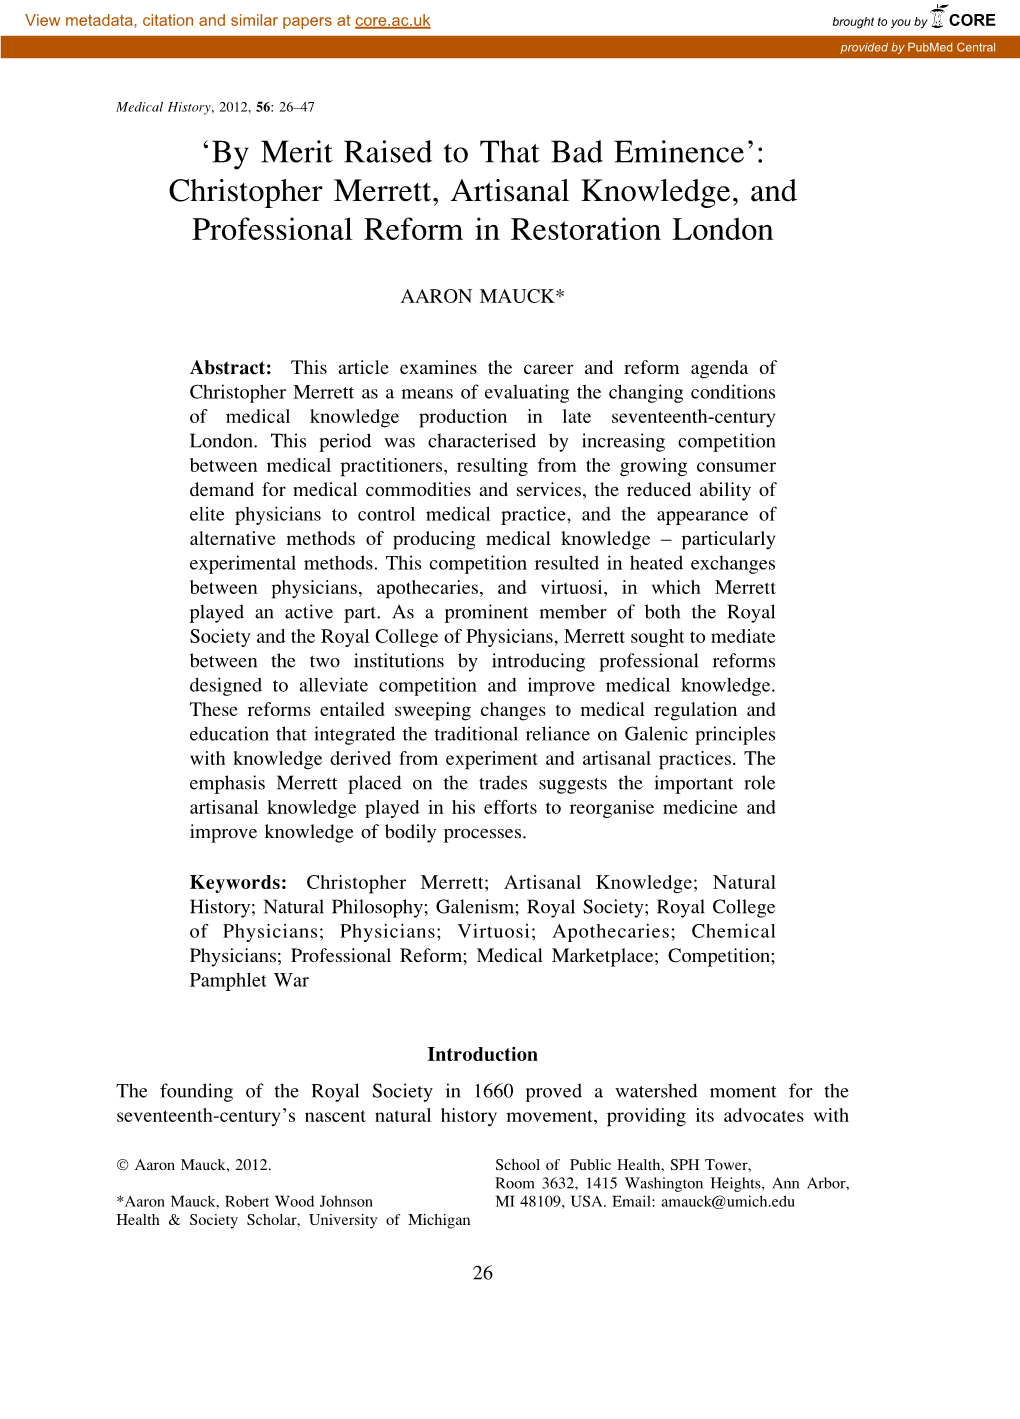 Christopher Merrett, Artisanal Knowledge, and Professional Reform in Restoration London